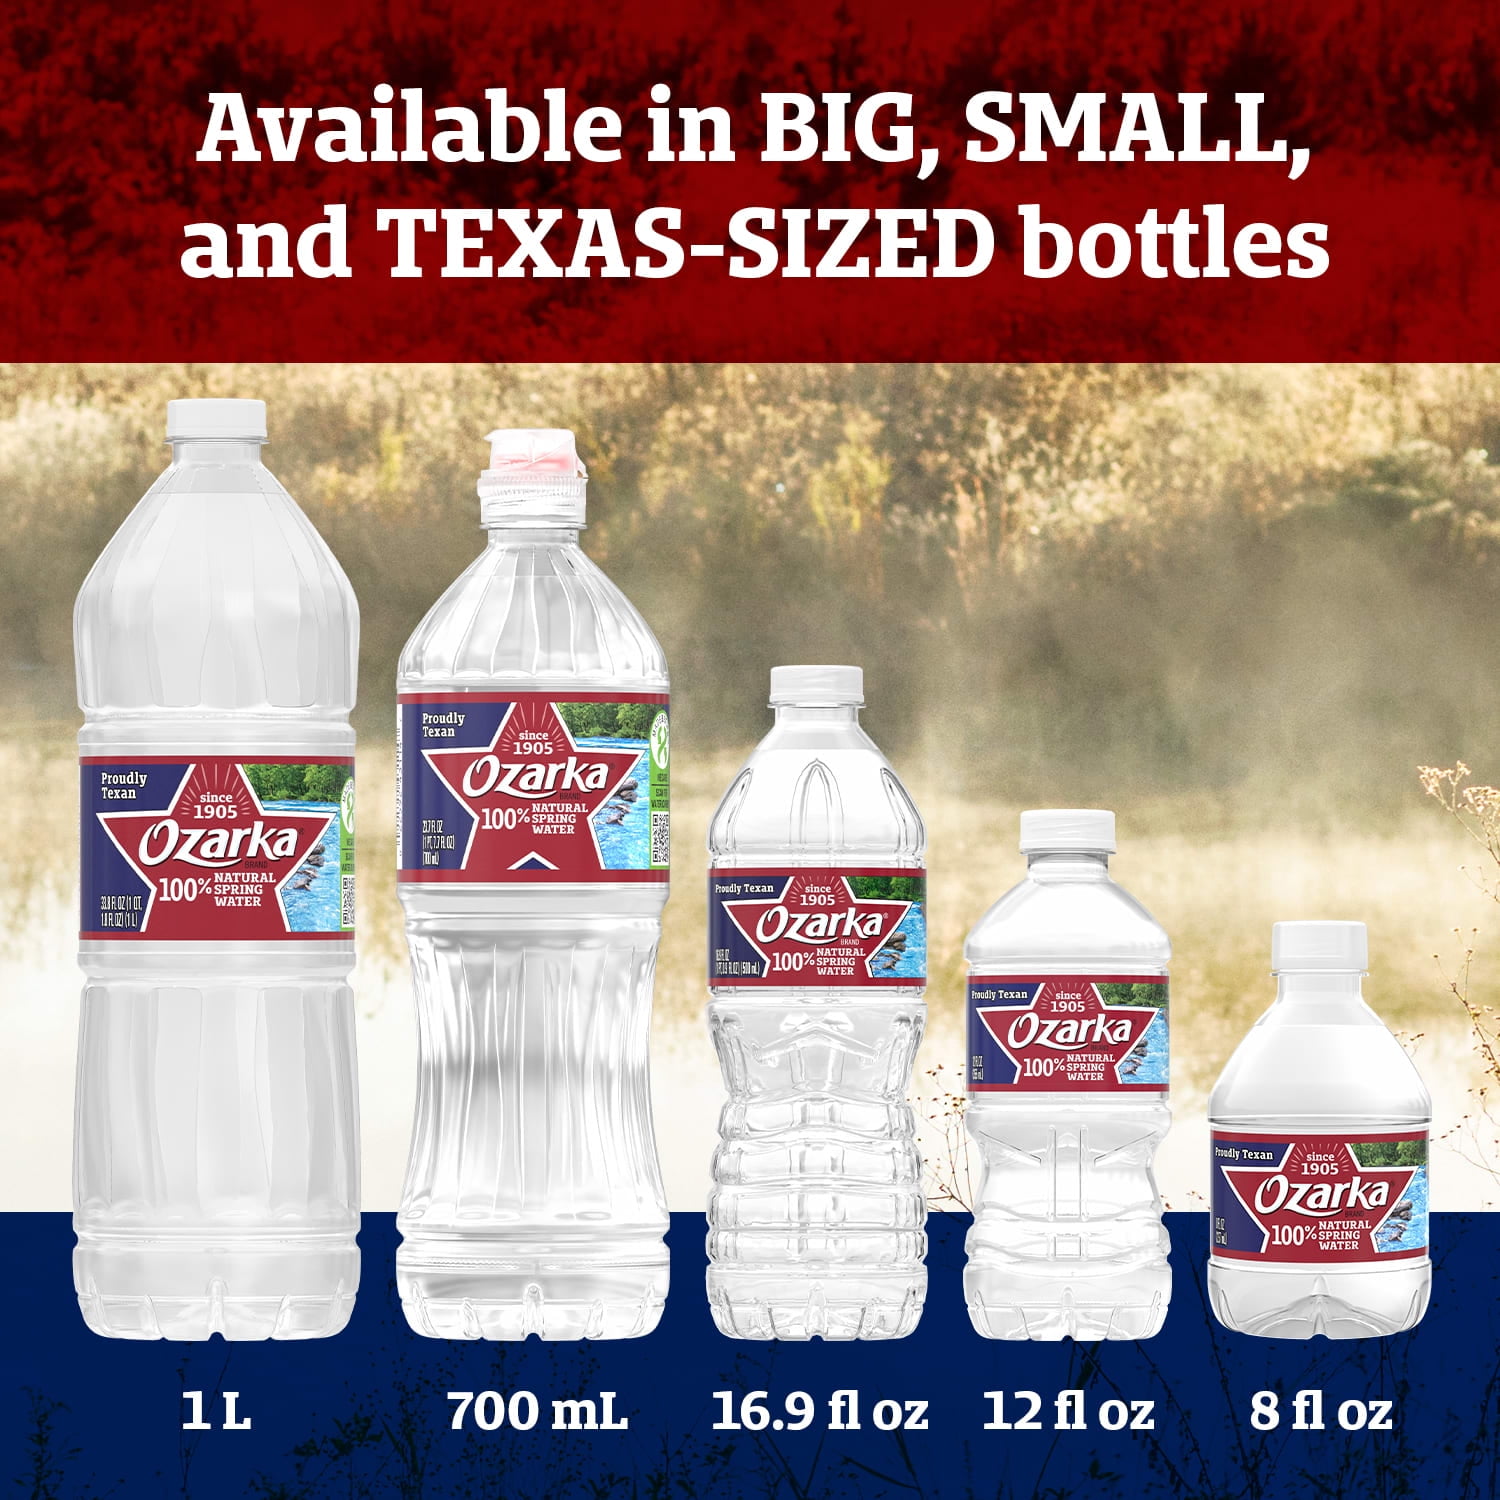 OZARKA Brand 100% Natural Spring Water, 33.8-ounce plastic bottles (Pack of 15) - 2